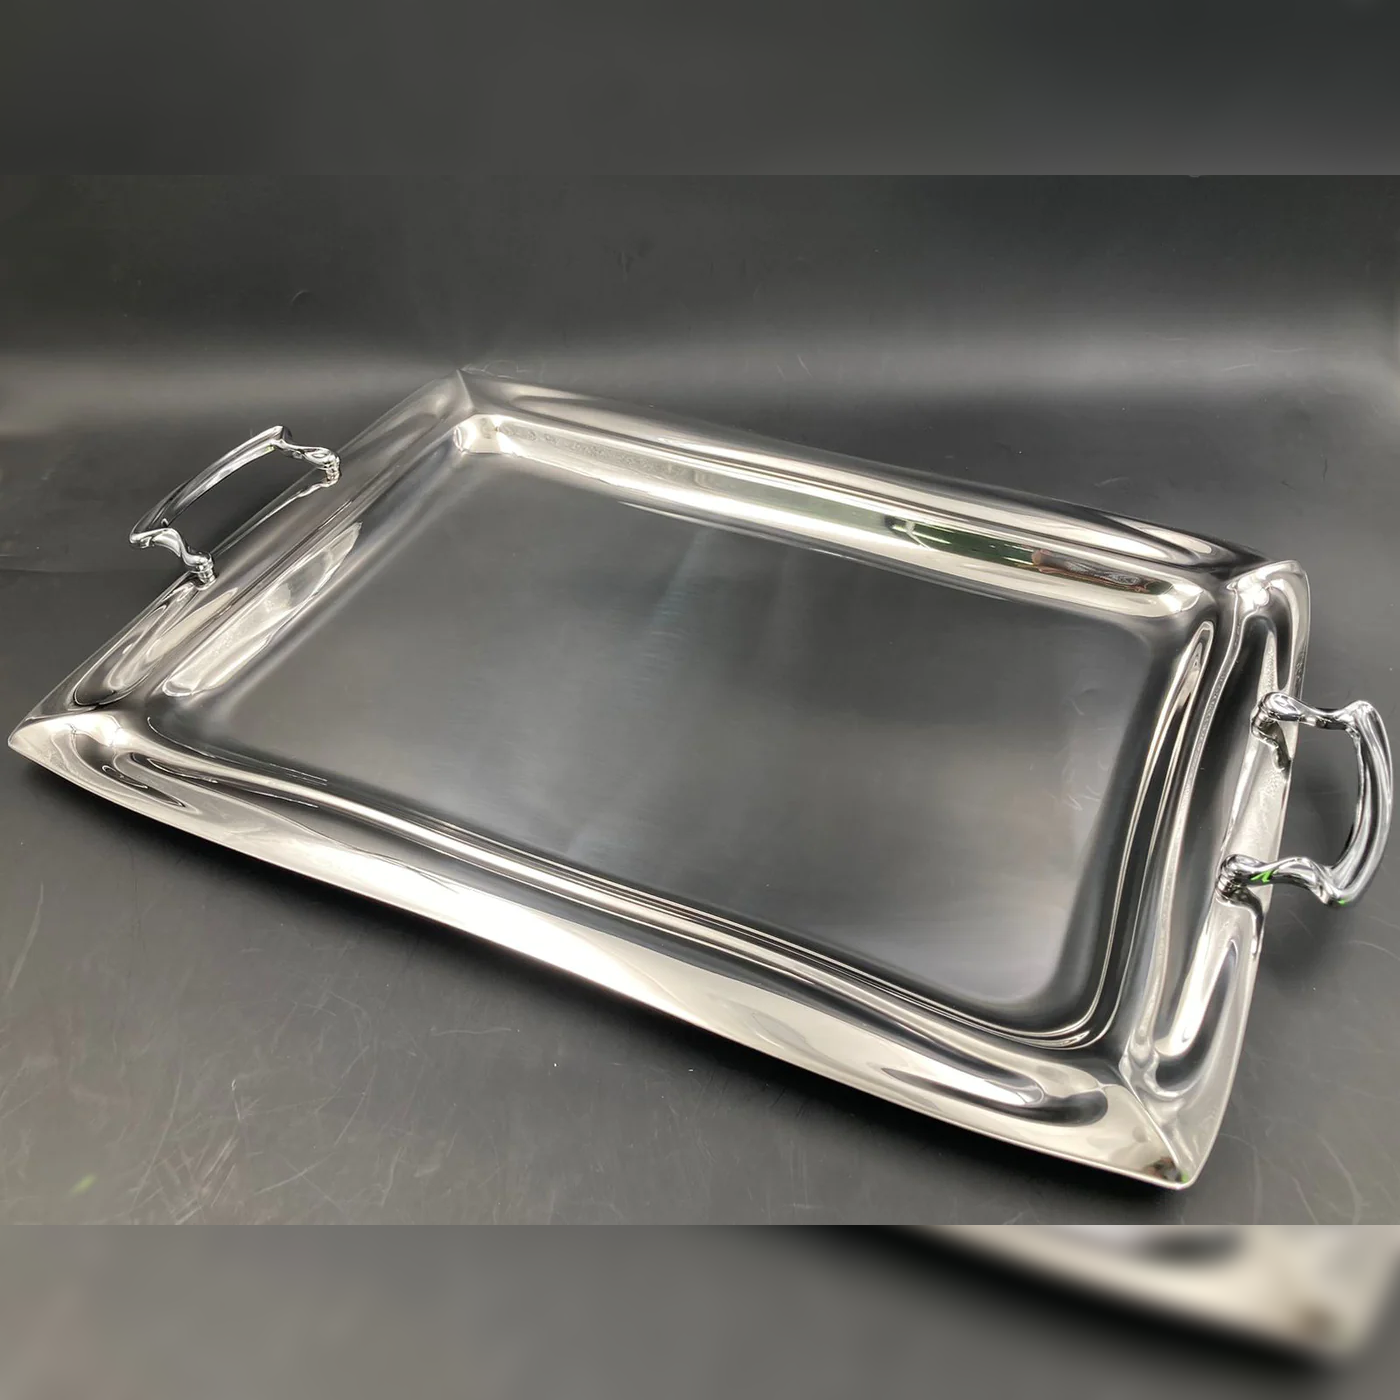 Dosthoff Elegance Serving Tray Premium SS 18/10 50.5cm - Lunaz Shop